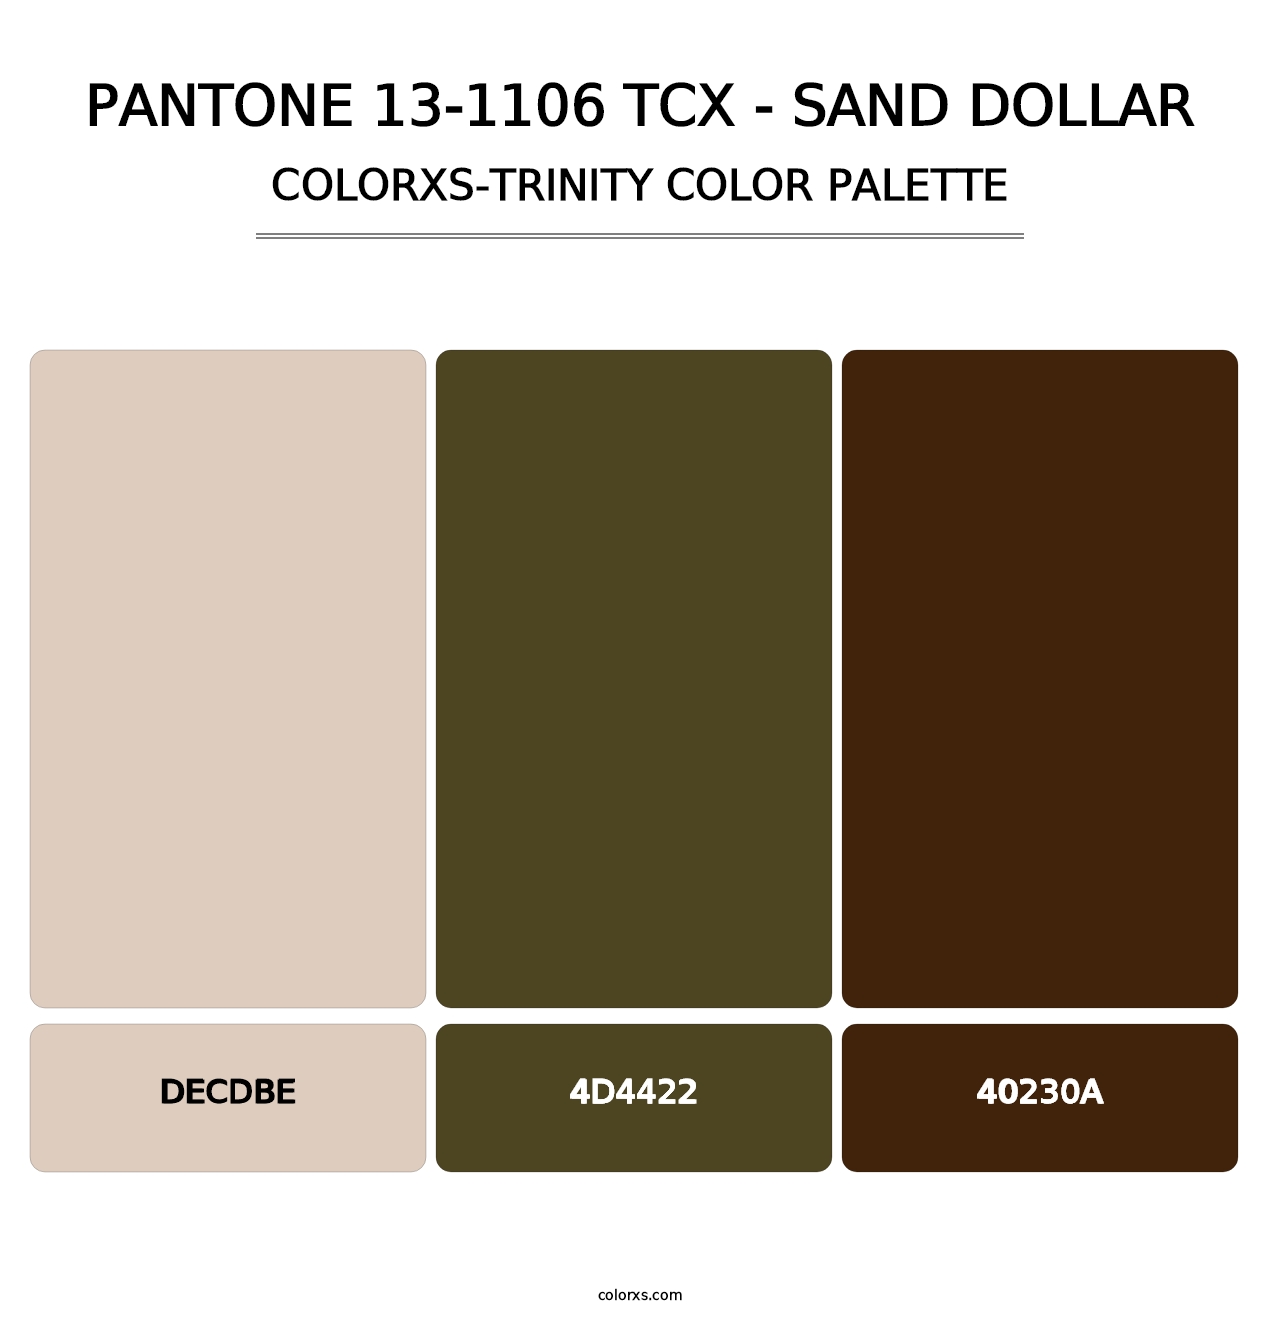 PANTONE 13-1106 TCX - Sand Dollar - Colorxs Trinity Palette